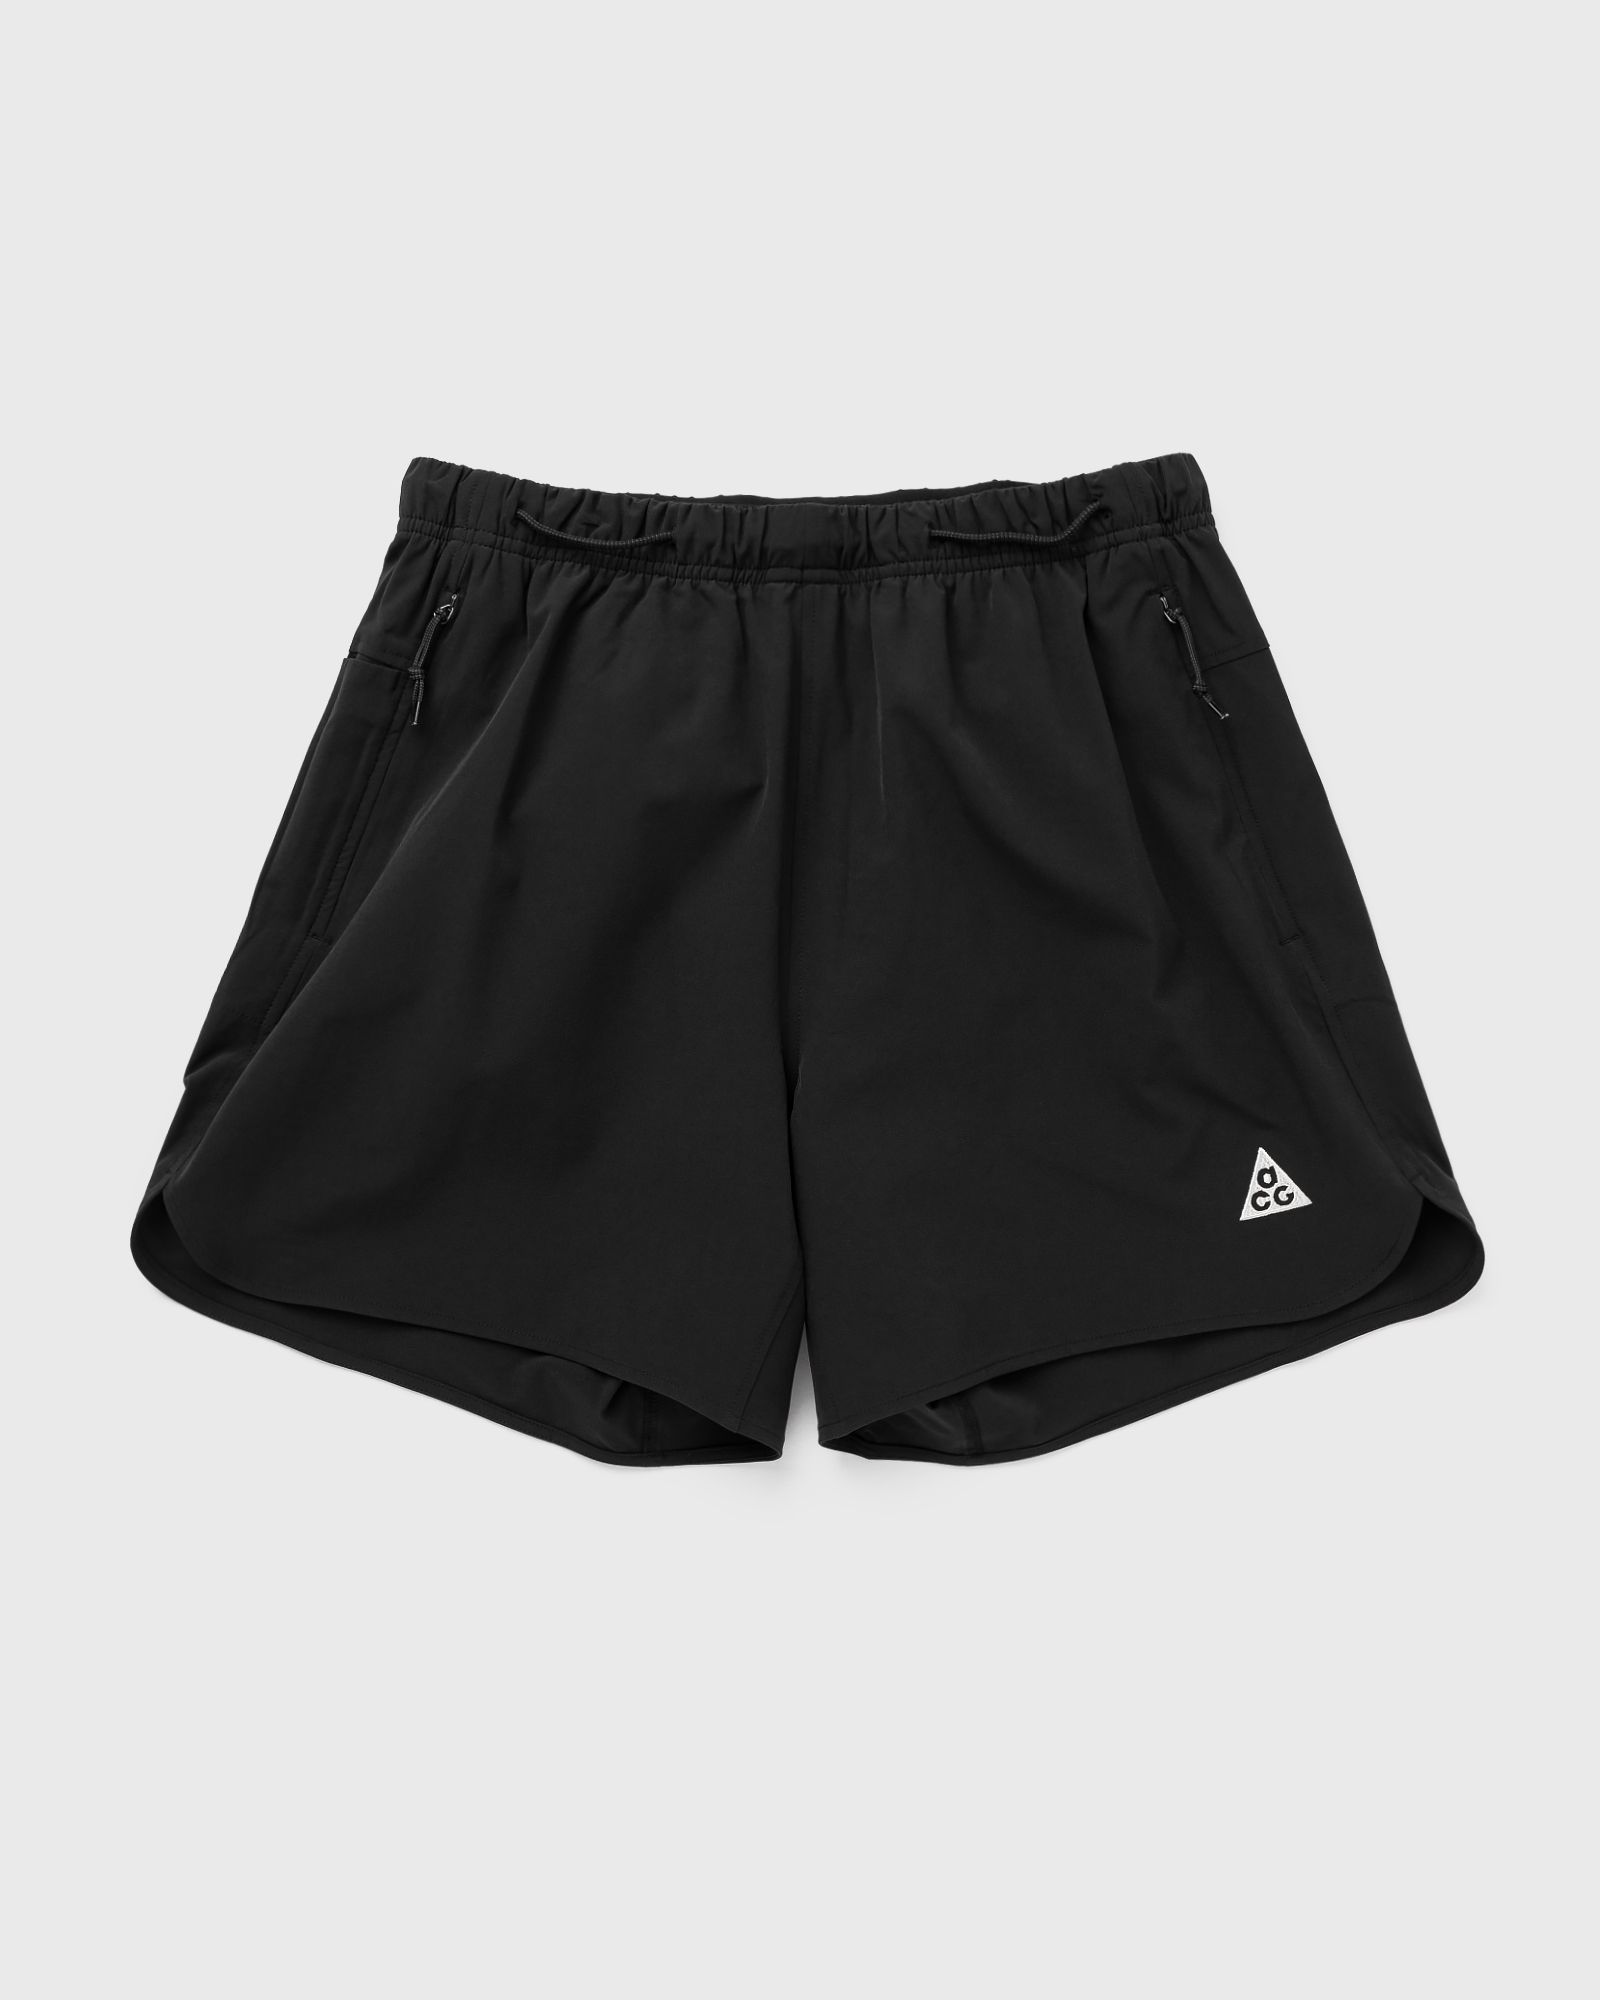 Nike - acg dri-fit "new sands" men's shorts men sport & team shorts white in größe:xxl